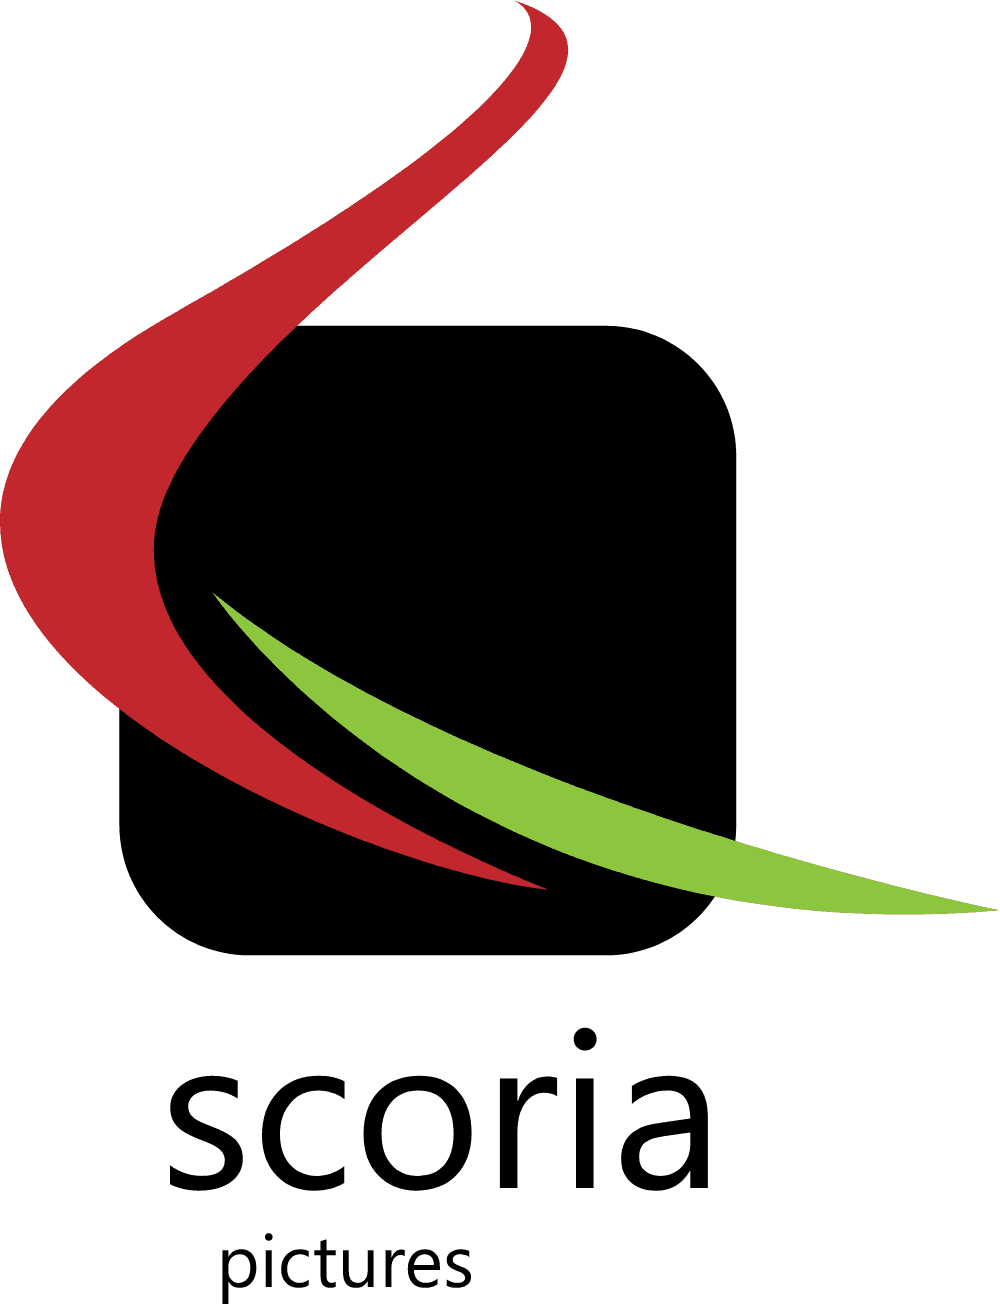 Scoria Entertainment Logo Template download